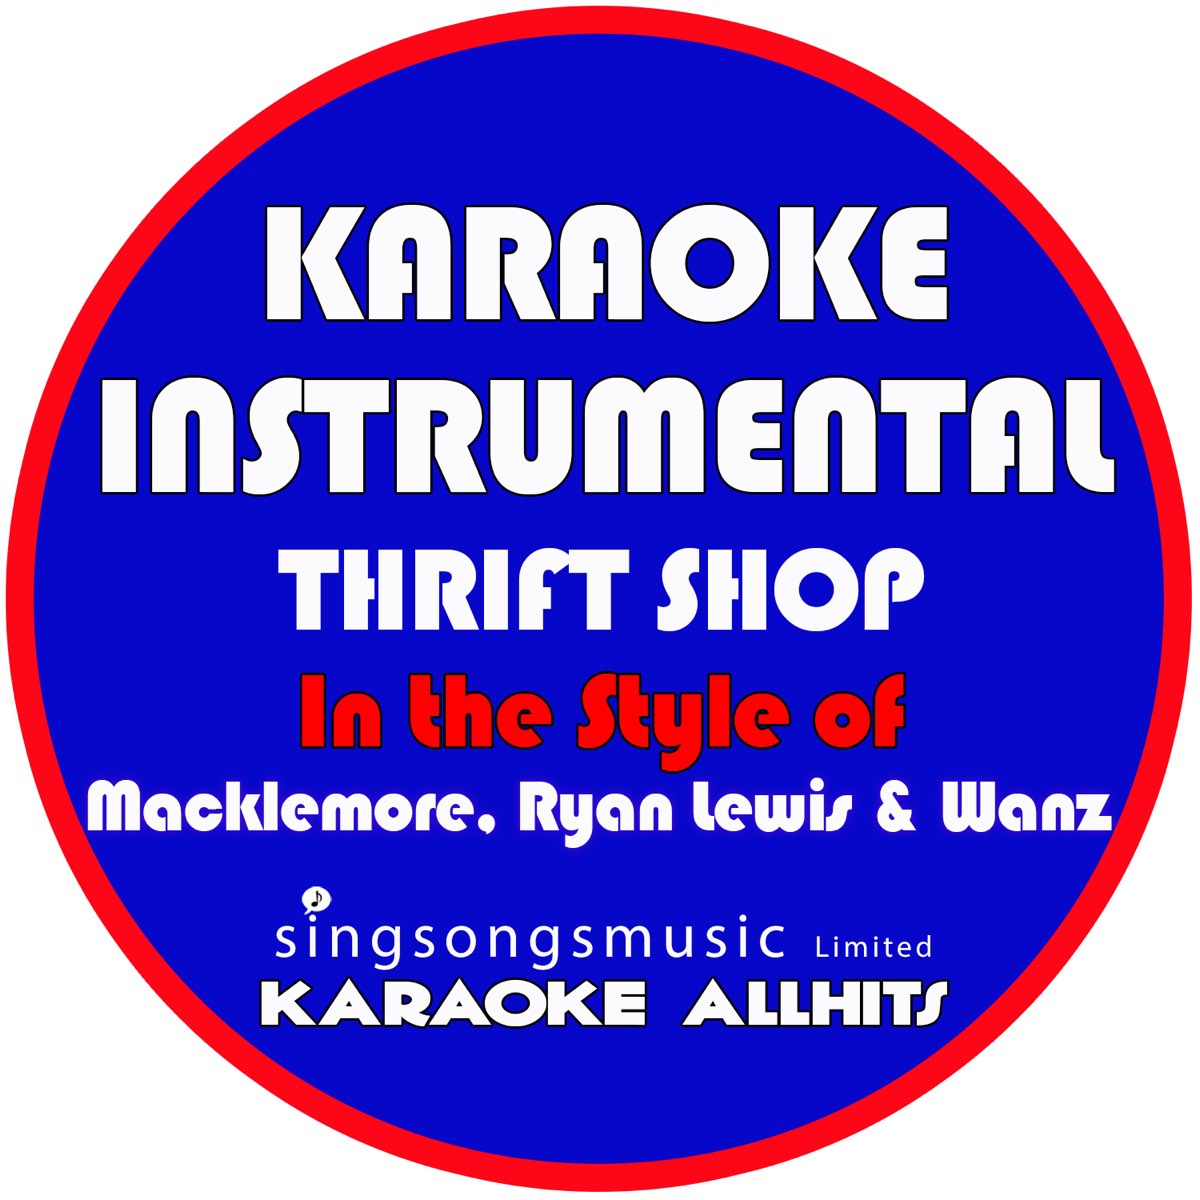 Thrift shop — Macklemore & Ryan Lewis featuring WANZ Sax Note. Thrift shop Branding.